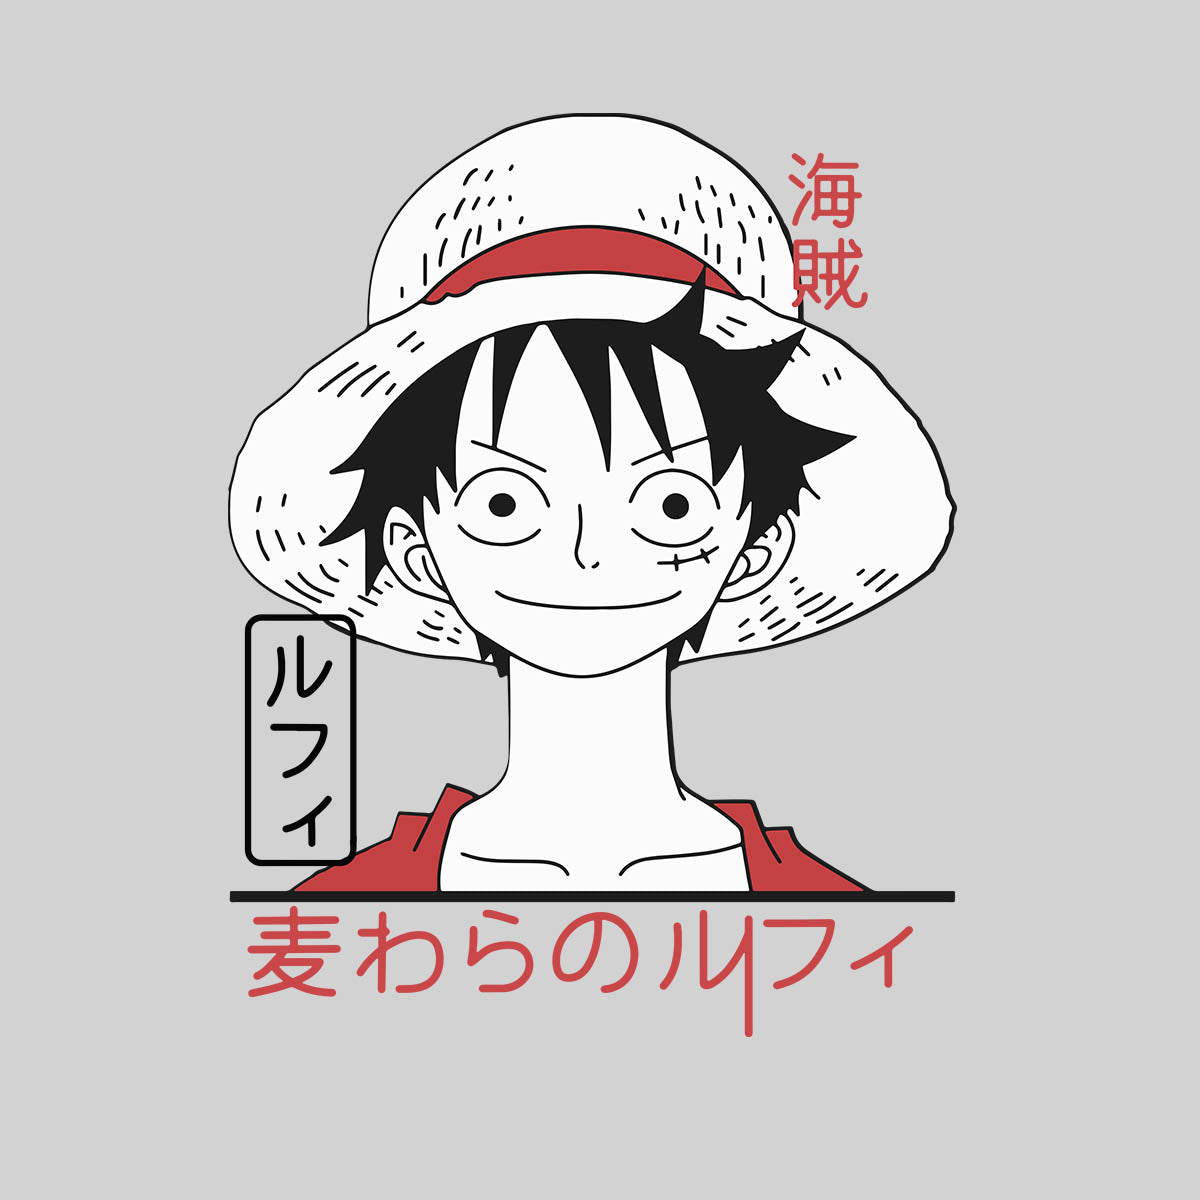 One Piece Monkey D Luffy Japanese Anime Manga  T-shirt for Kids